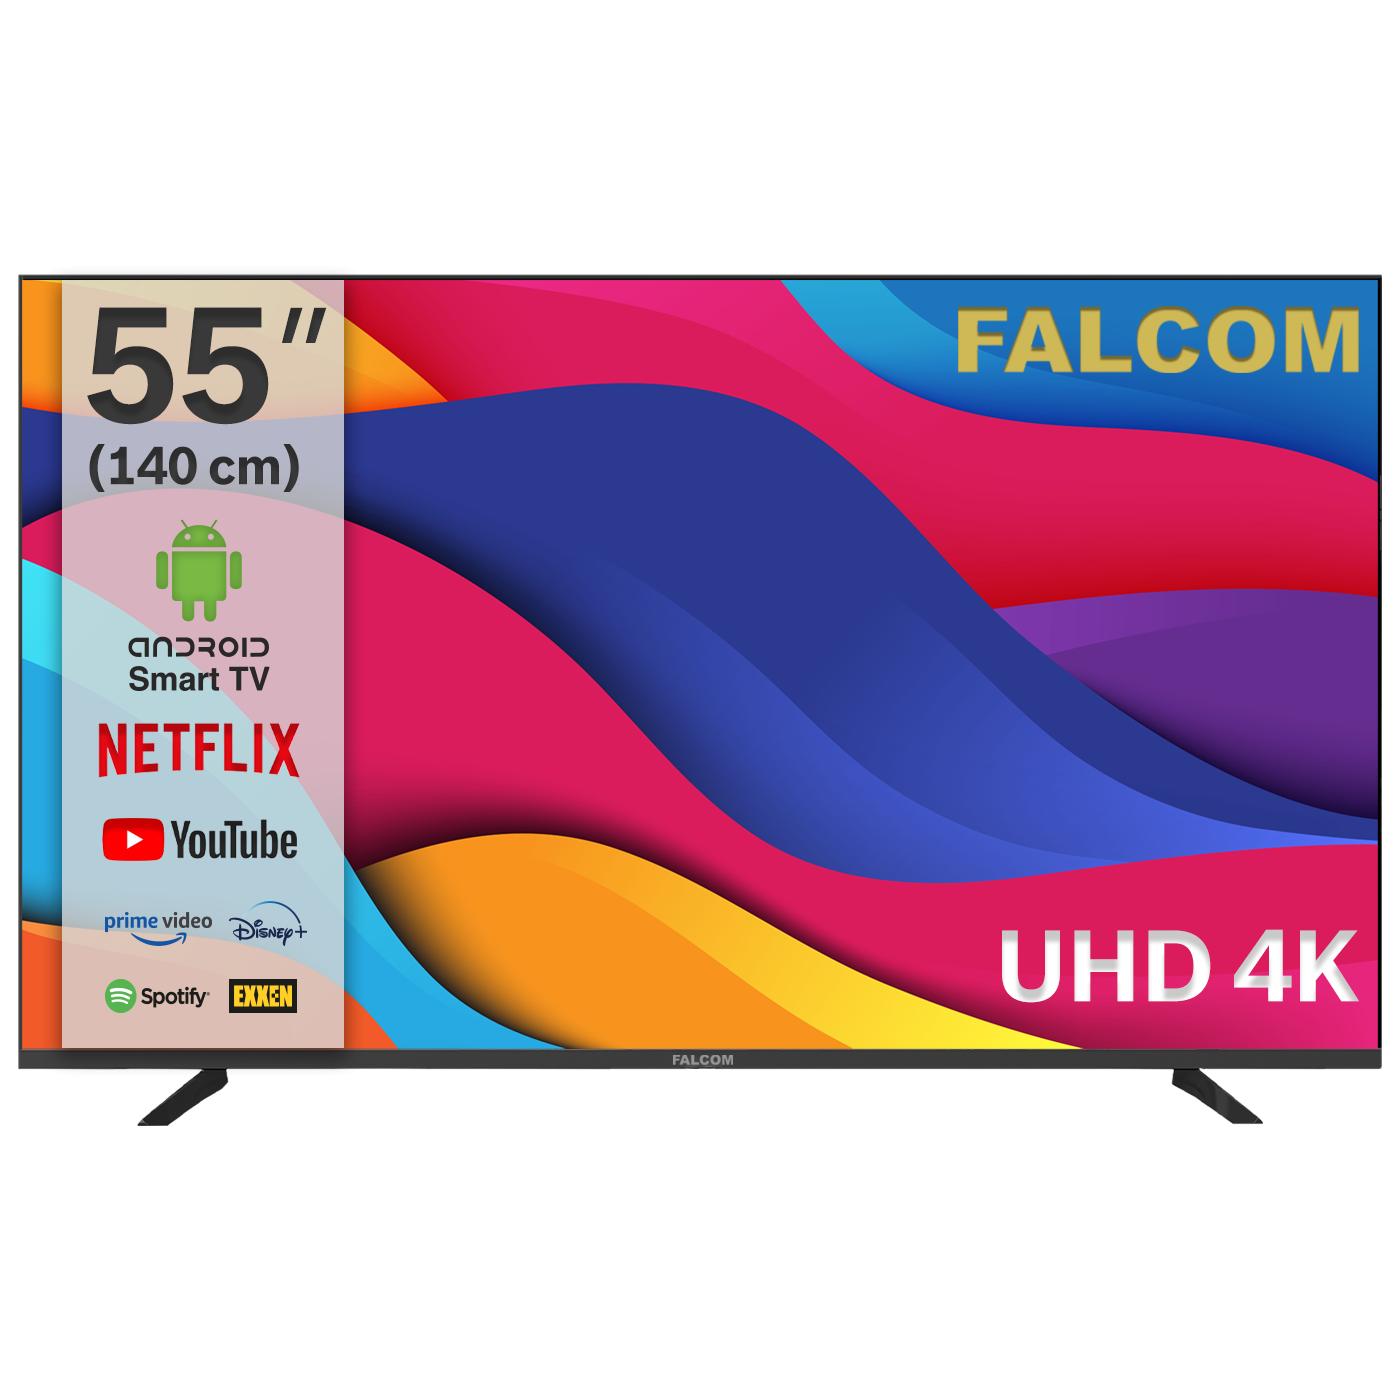 Falcom TV - Smart LED TV@Android 55